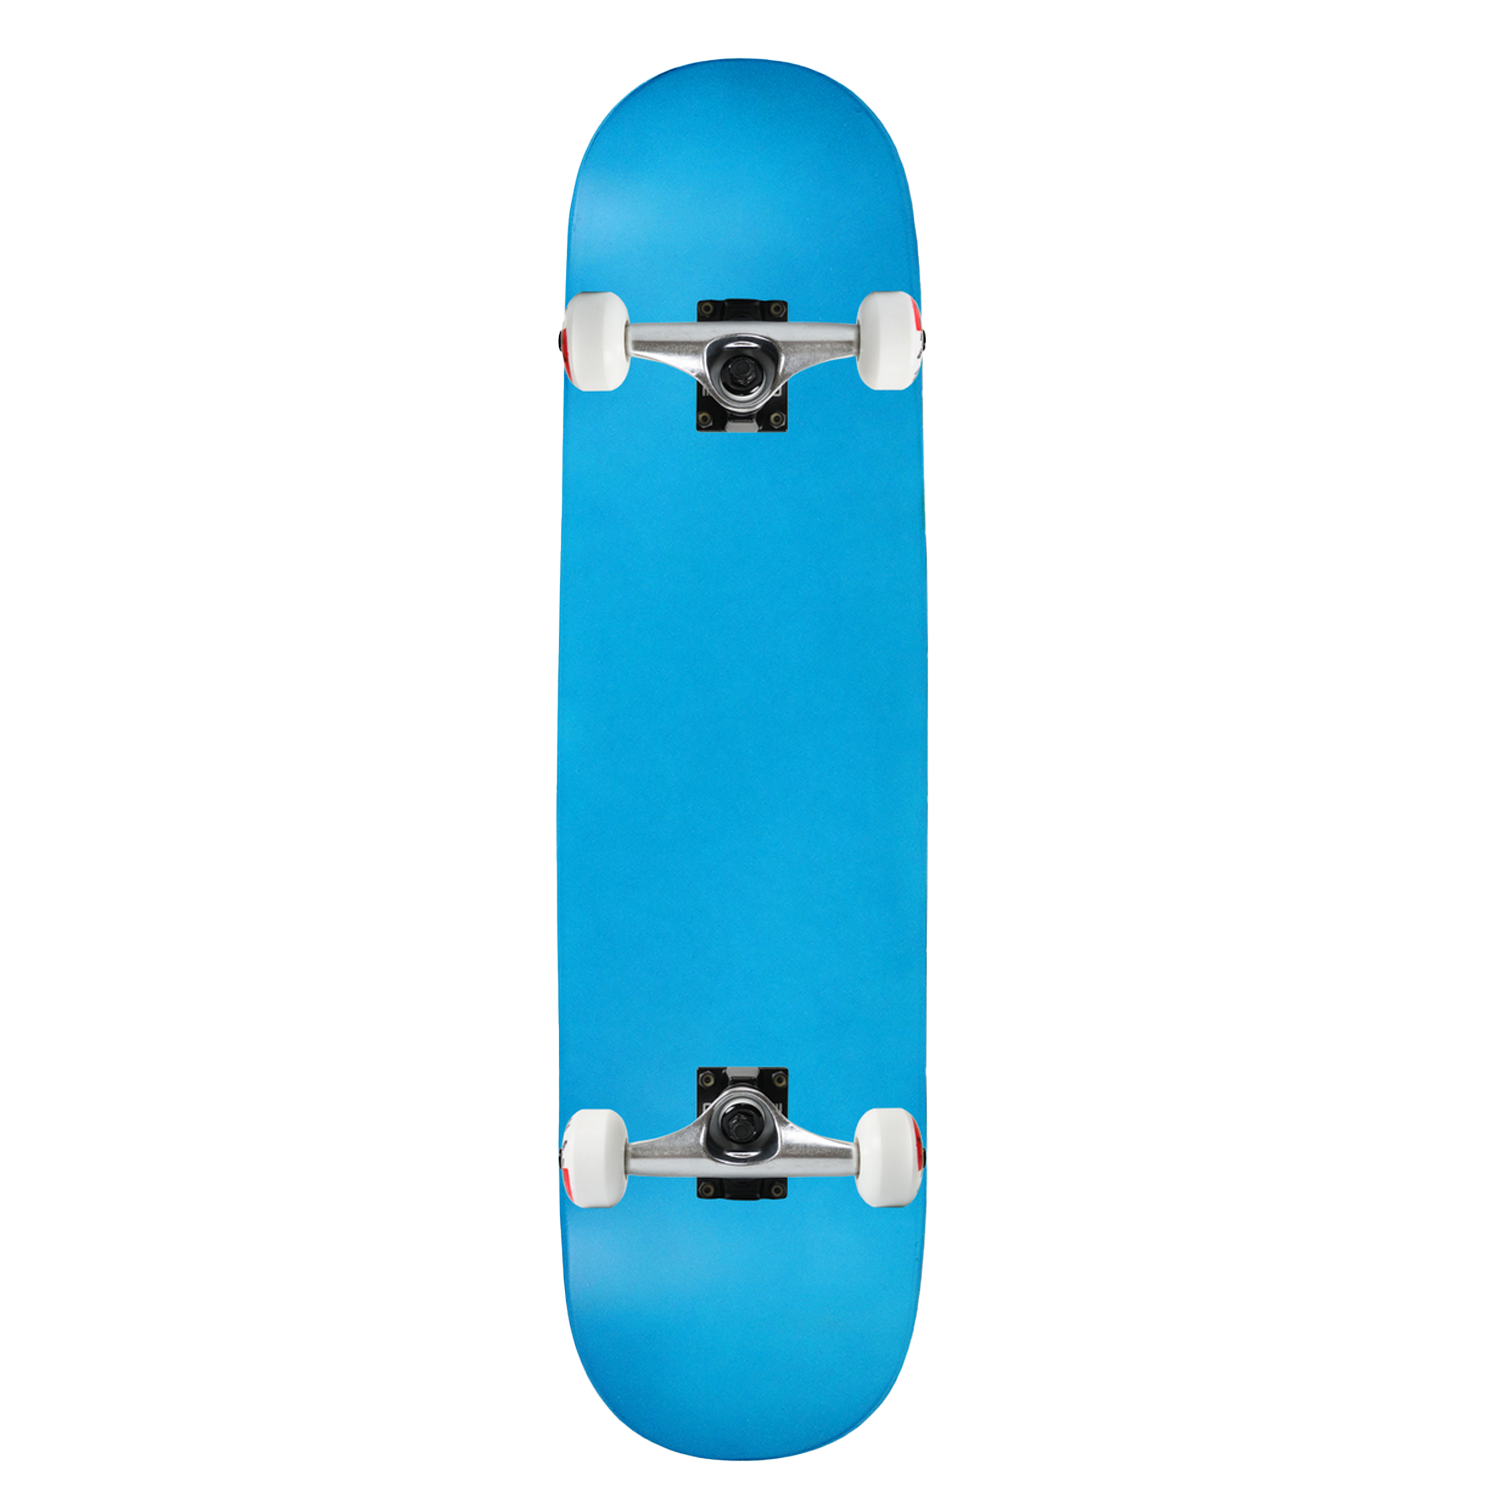 Moose Skateboard Deck Orange Stain 7.6' x 31.1' BRAND NEW IN SHRINK